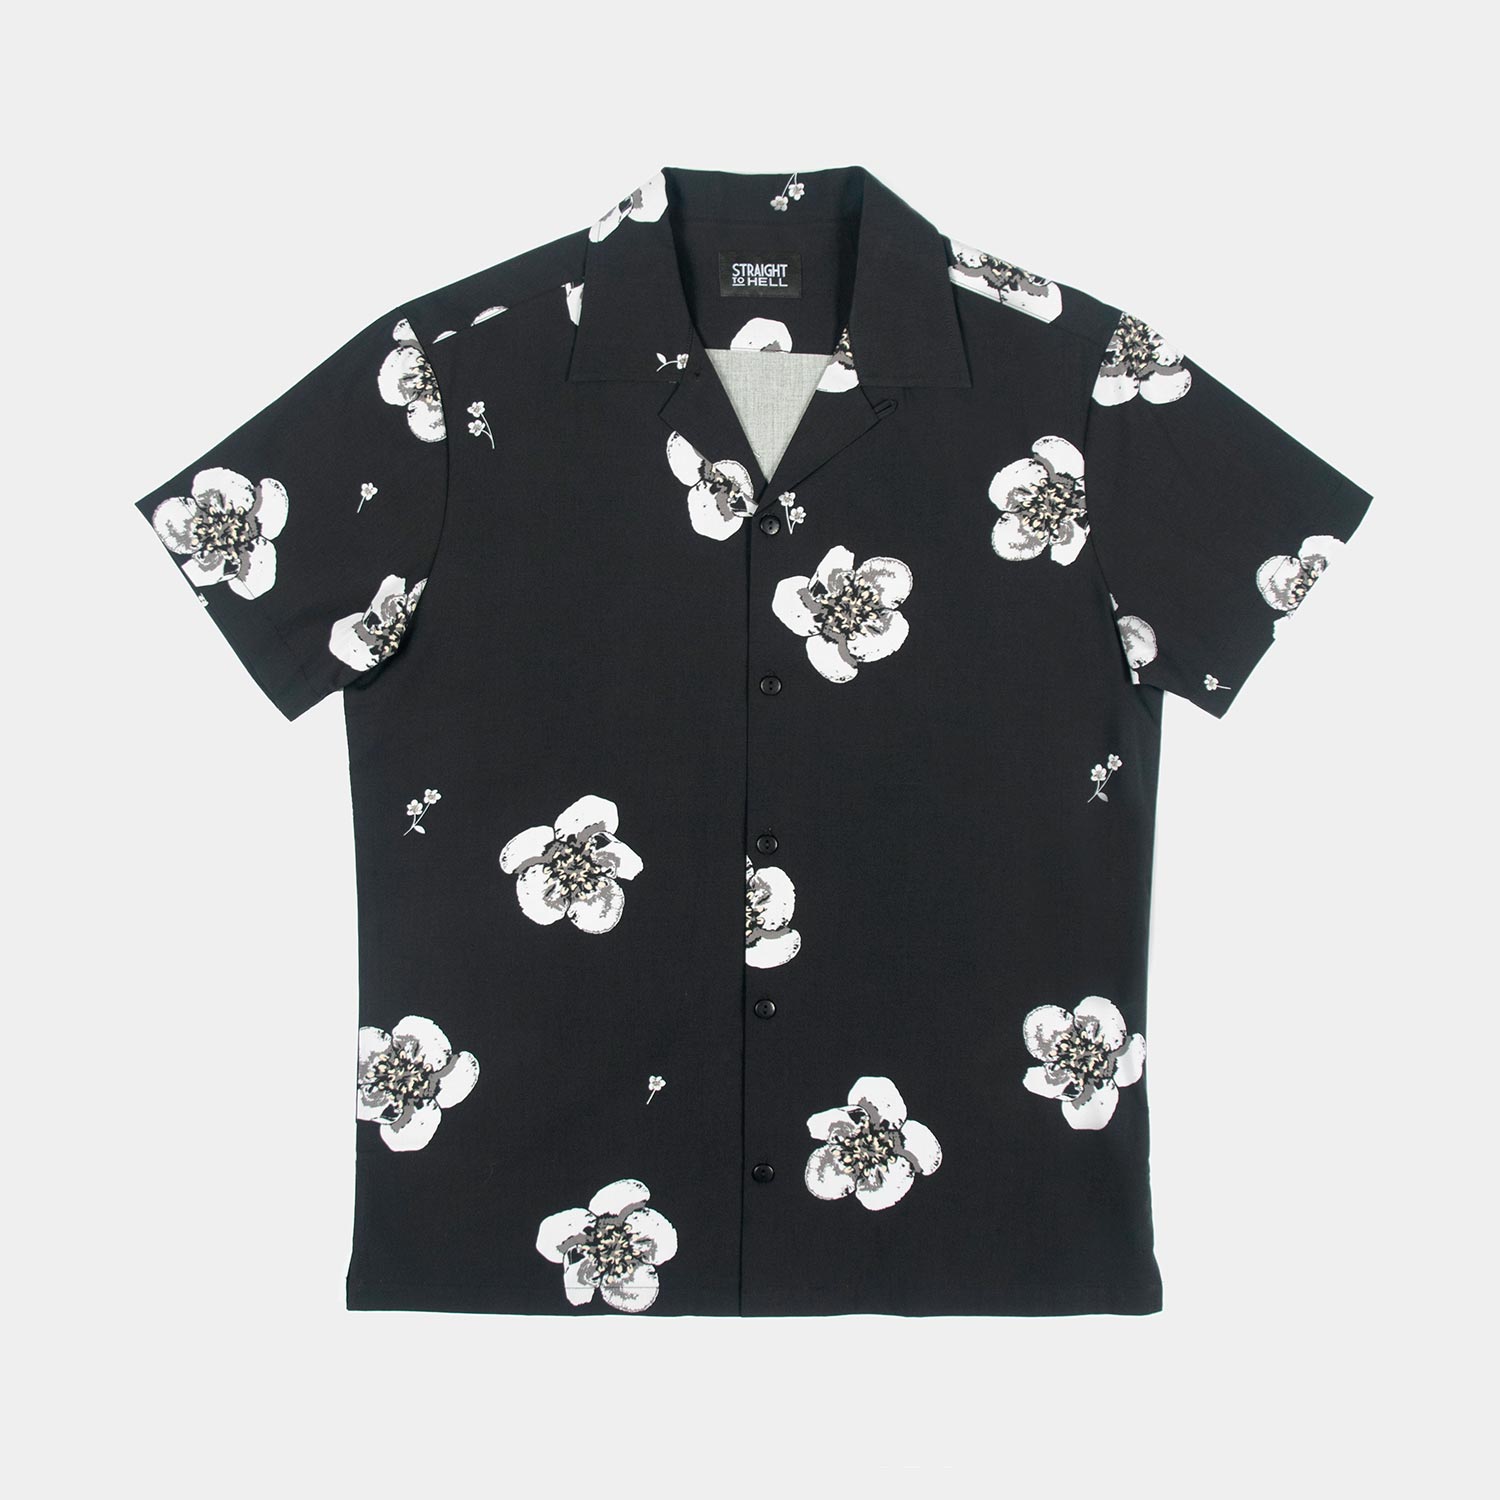 Heart Full of Soul - Black and Grey Floral Print Shirt (Size XS, S, M, L,  XL, 2XL, 3XL, 4XL)